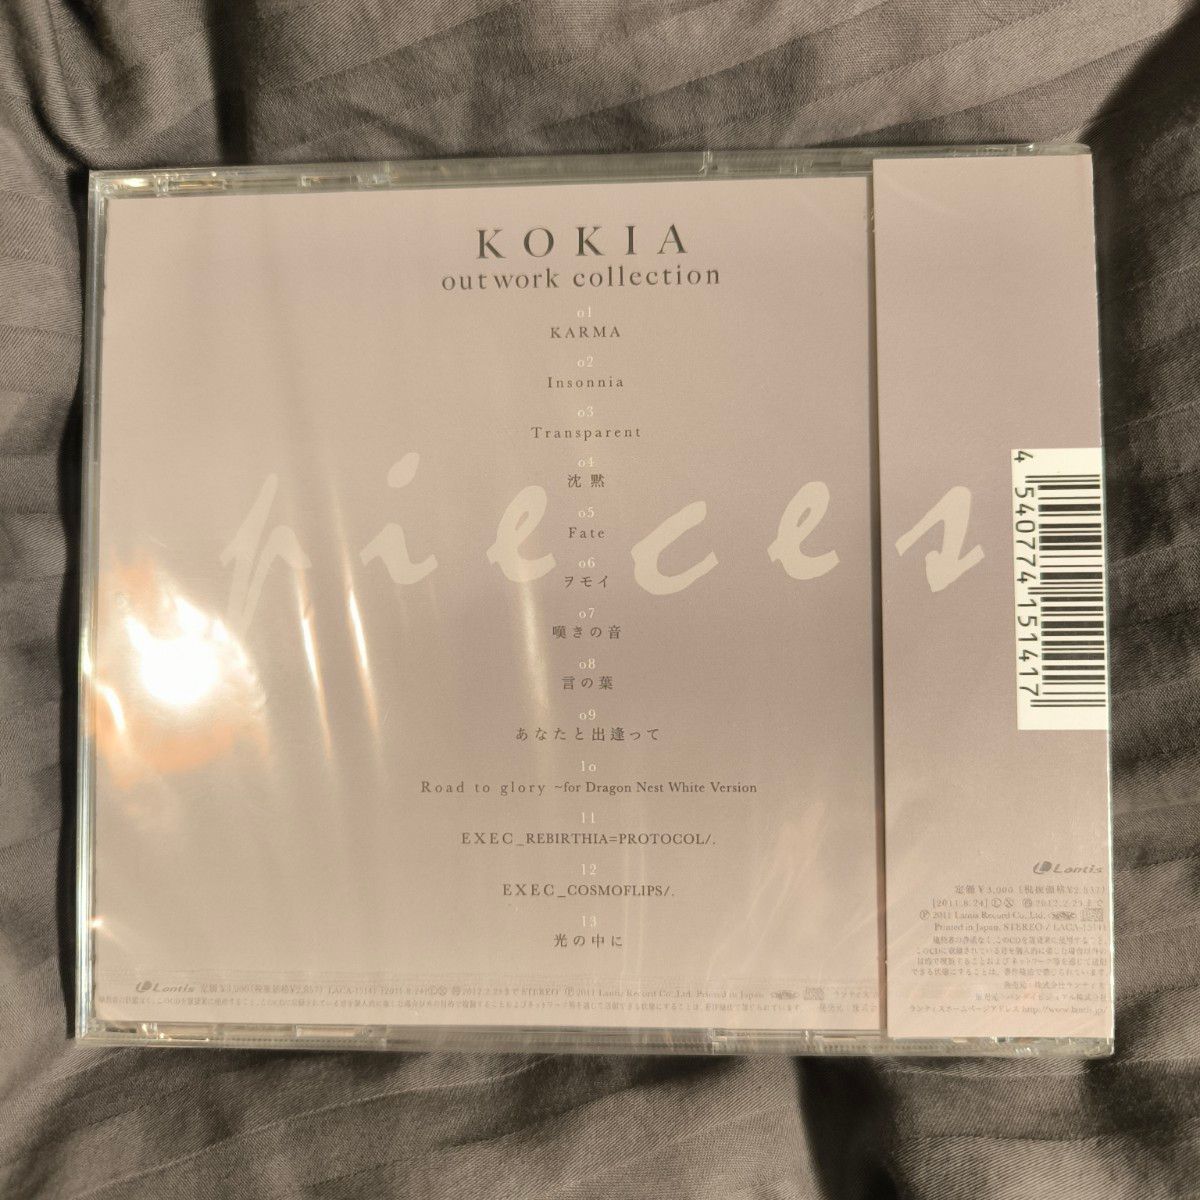 新品未開封 KOKIA outwork collection「pieces」 CD